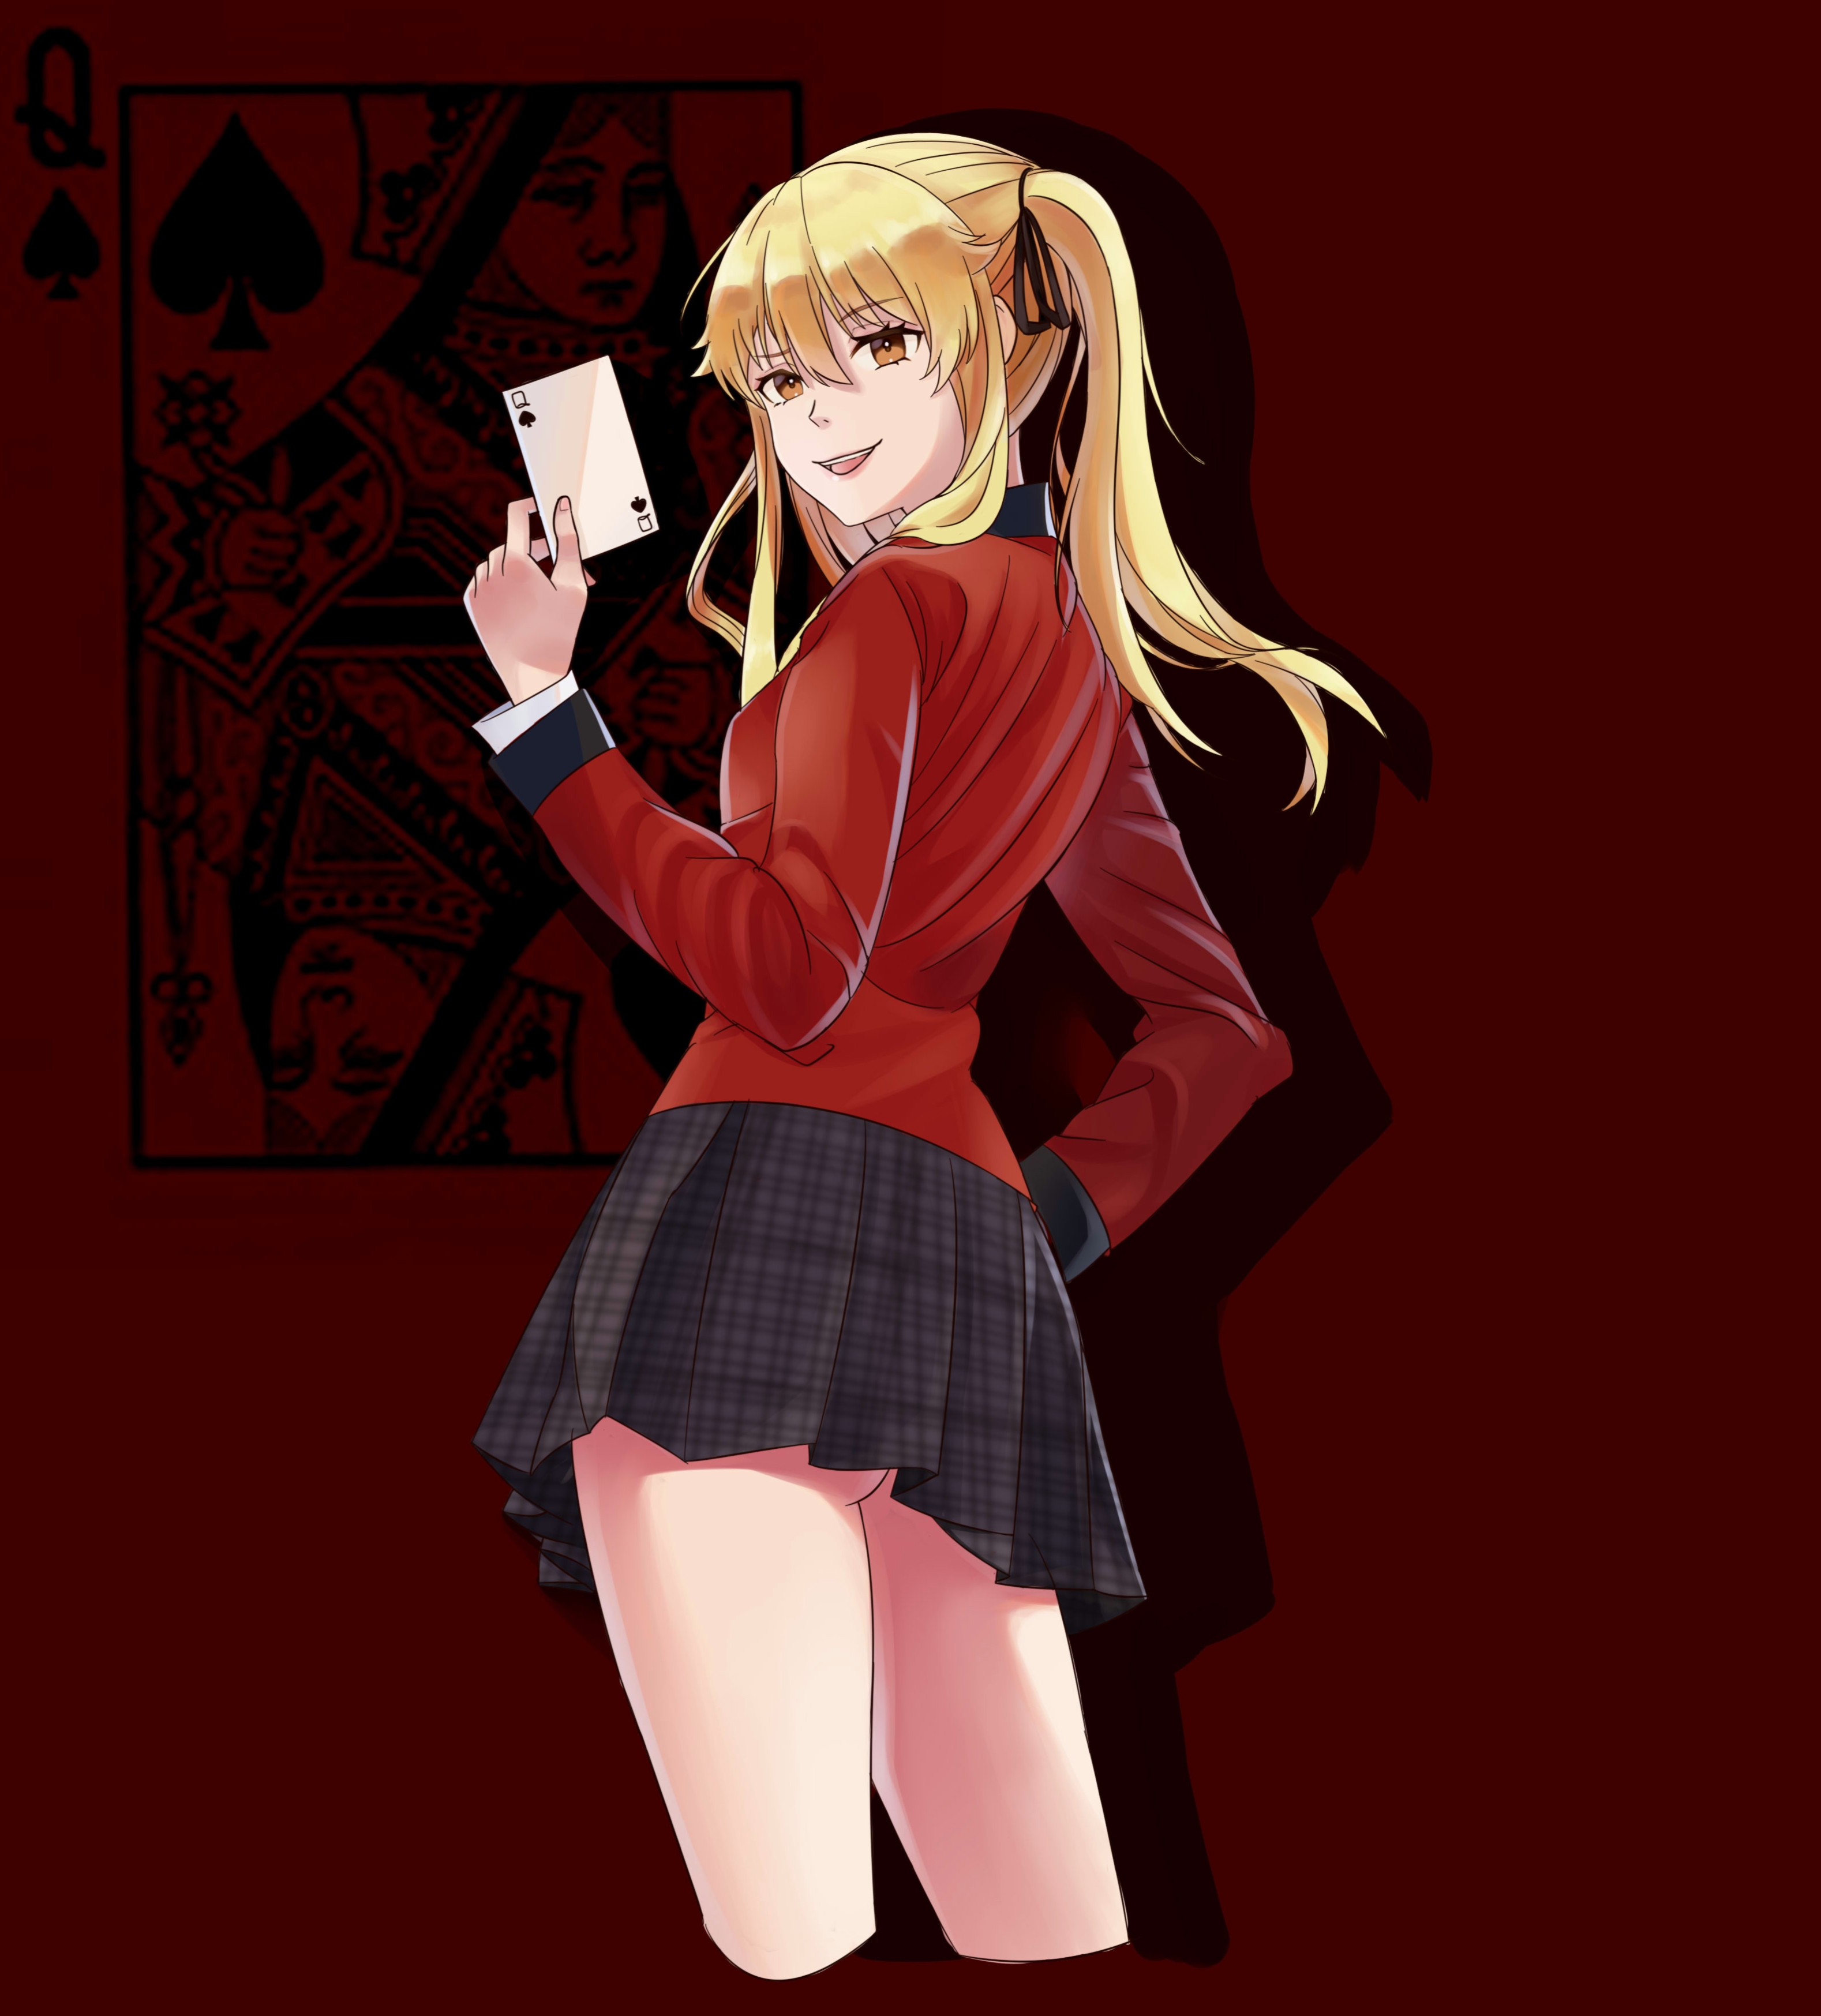 Anime 3156x3494 anime anime girls Kakegurui Saotome Meari twintails blonde solo artwork digital art fan art cards Queen of Spades ass